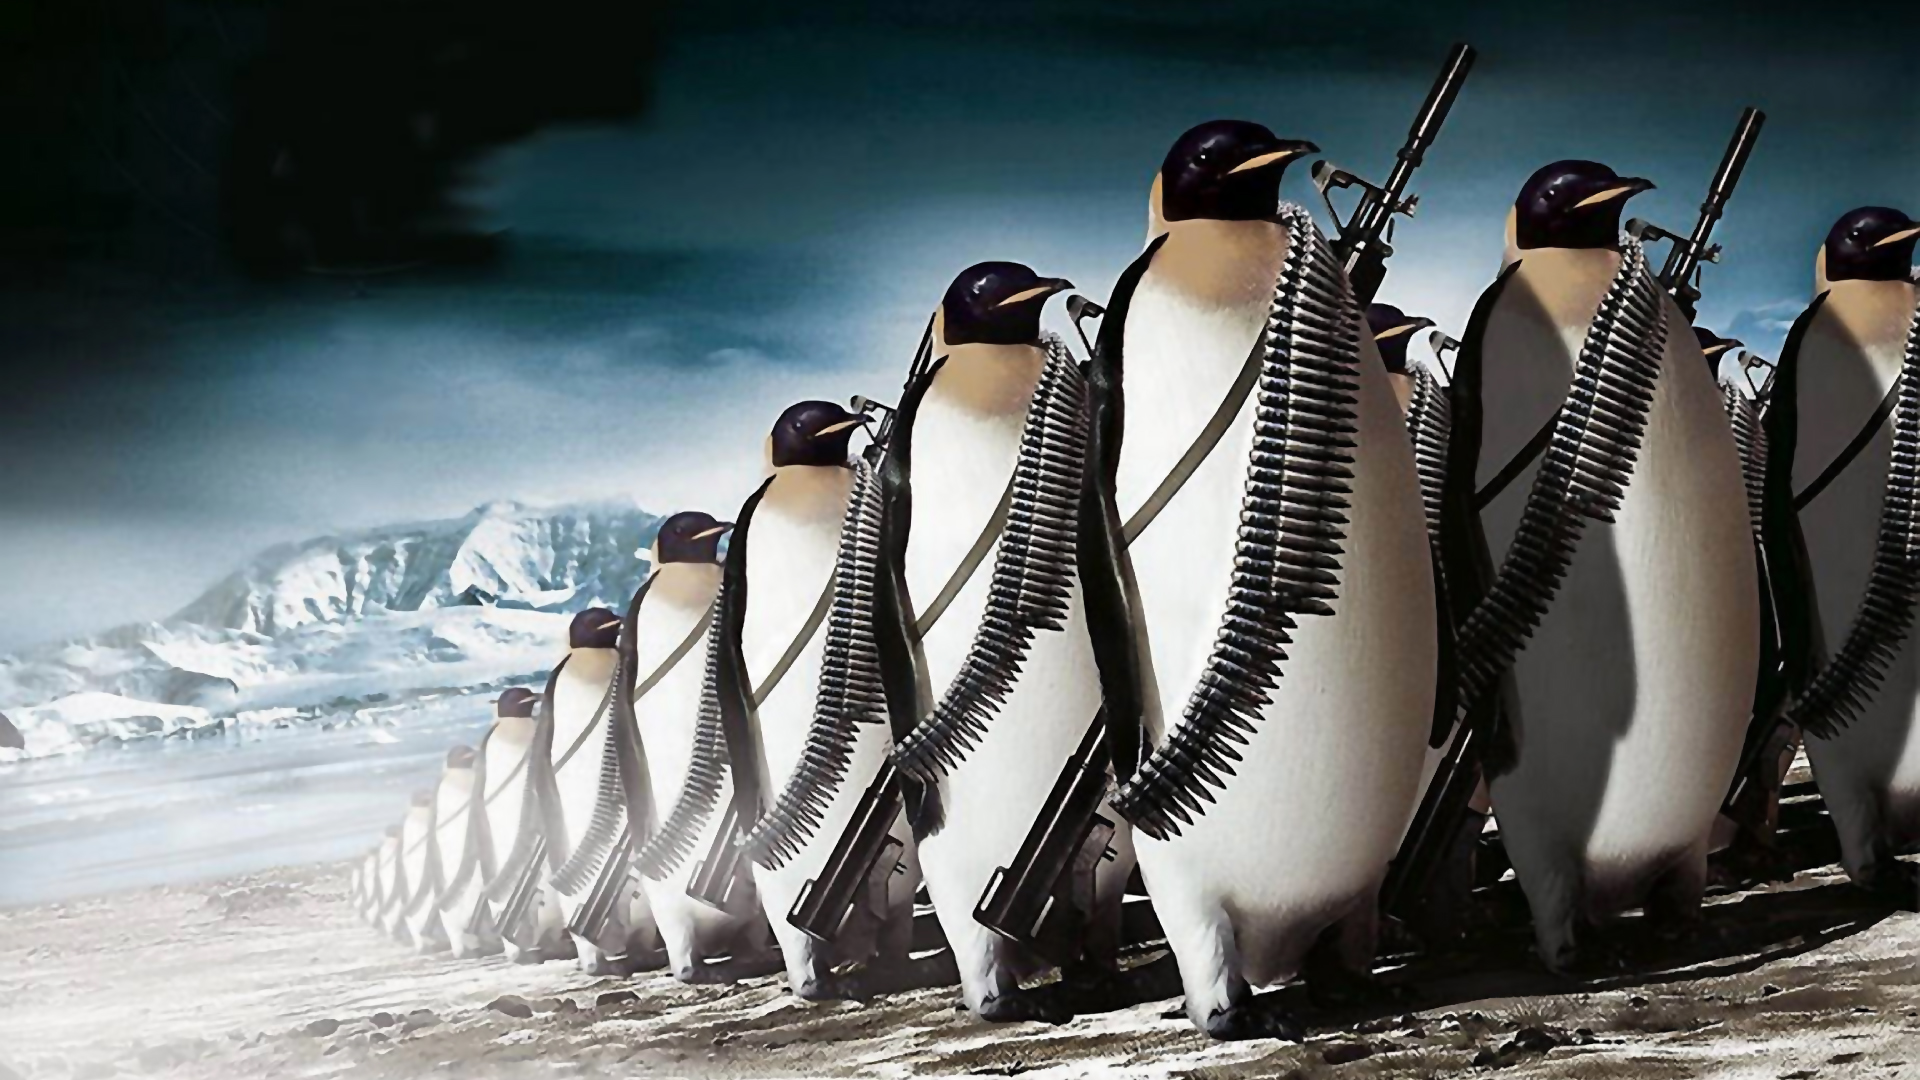 General 1920x1080 penguins humor army digital art animals weapon